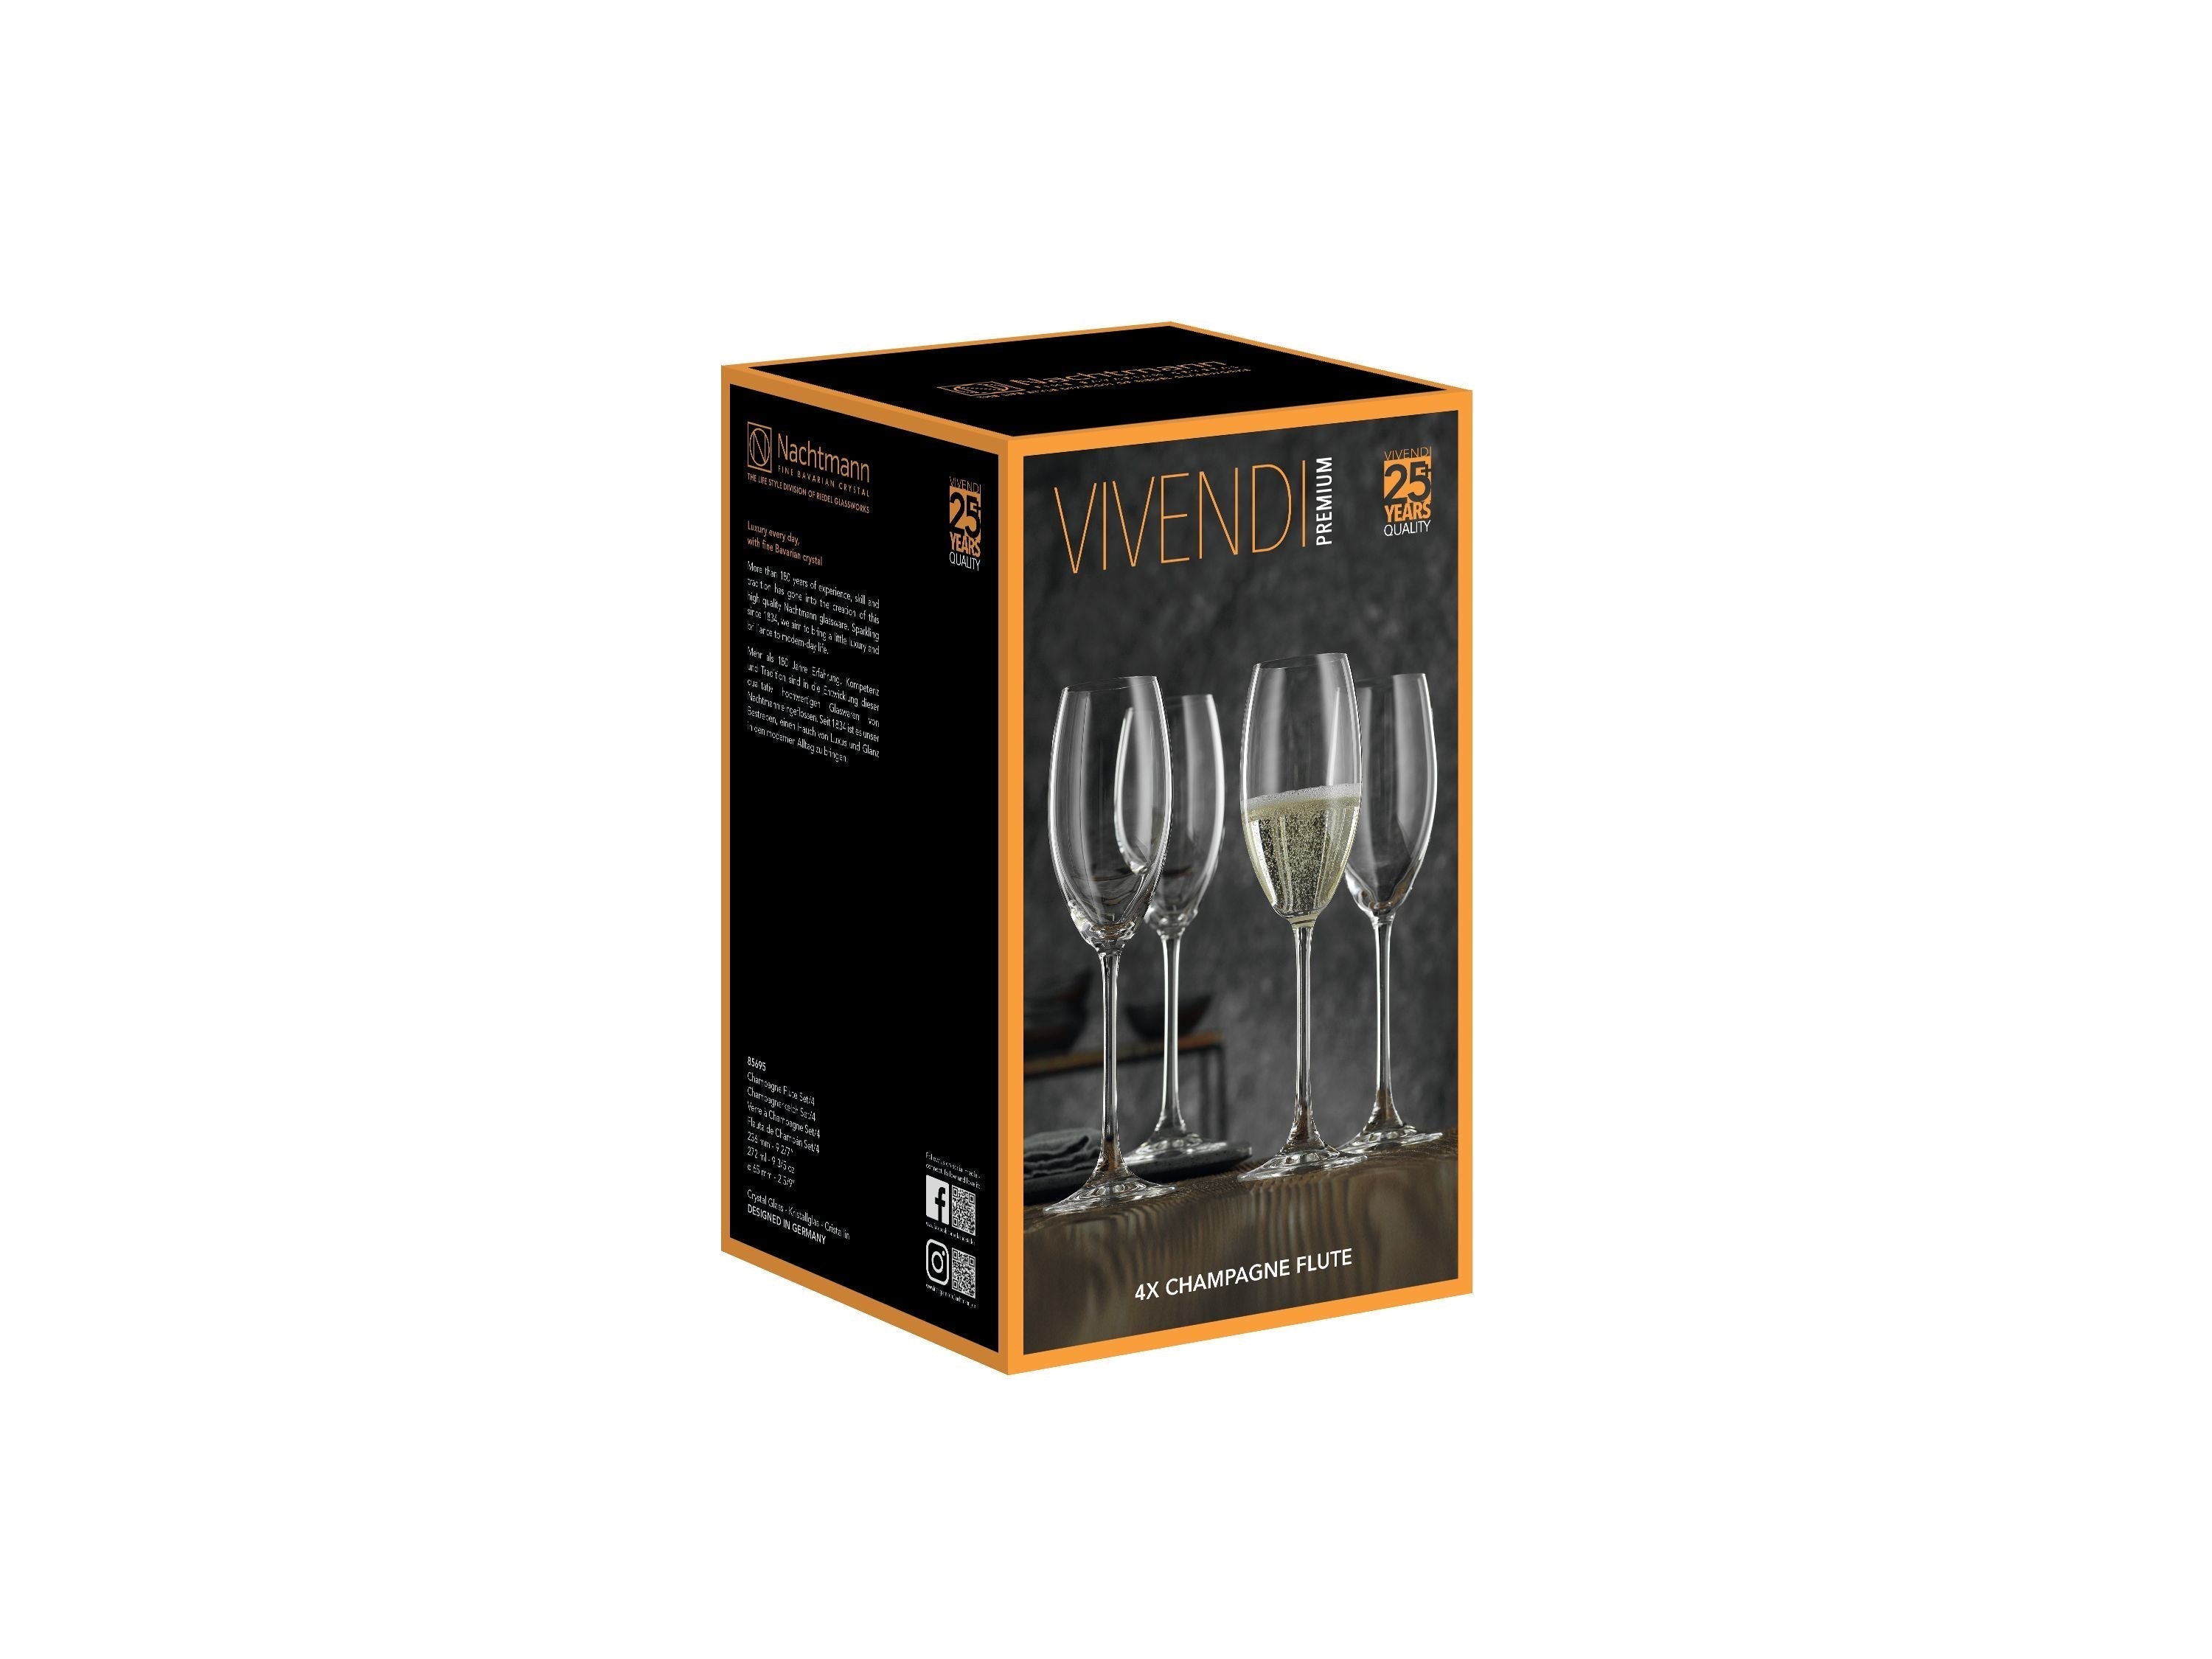 Nachtmann Vivendi Premium Champagne Wopblet 272 ml, conjunto de 4